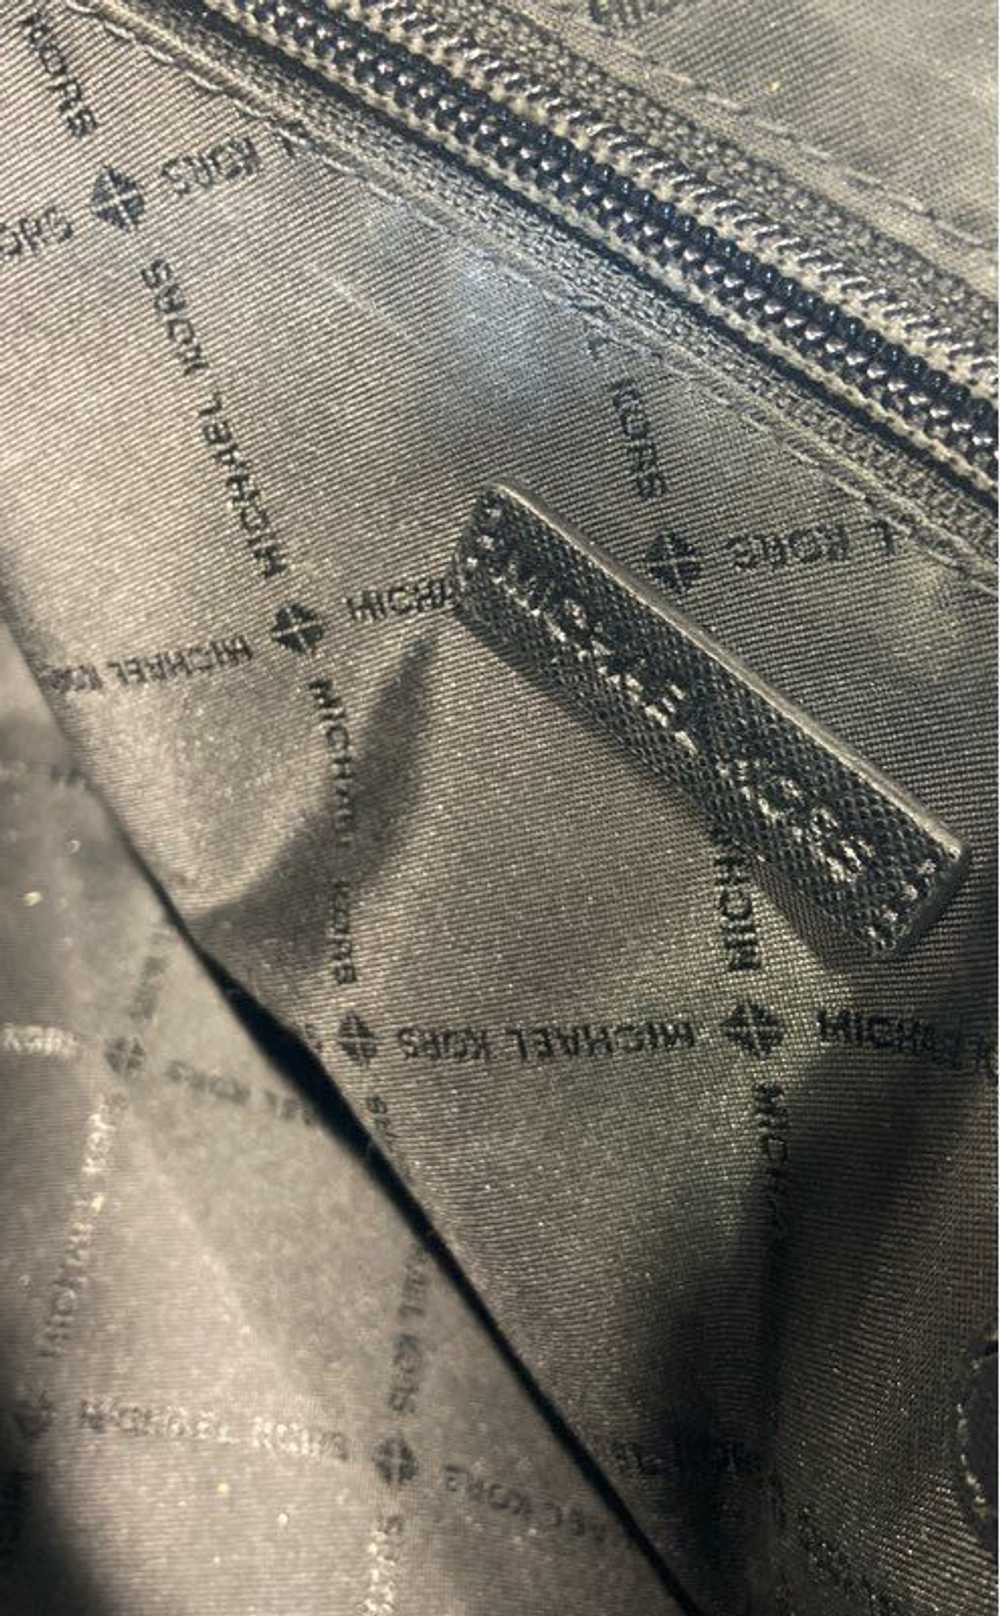 Michael Kors Crossbody Bag Black, Gold - image 8